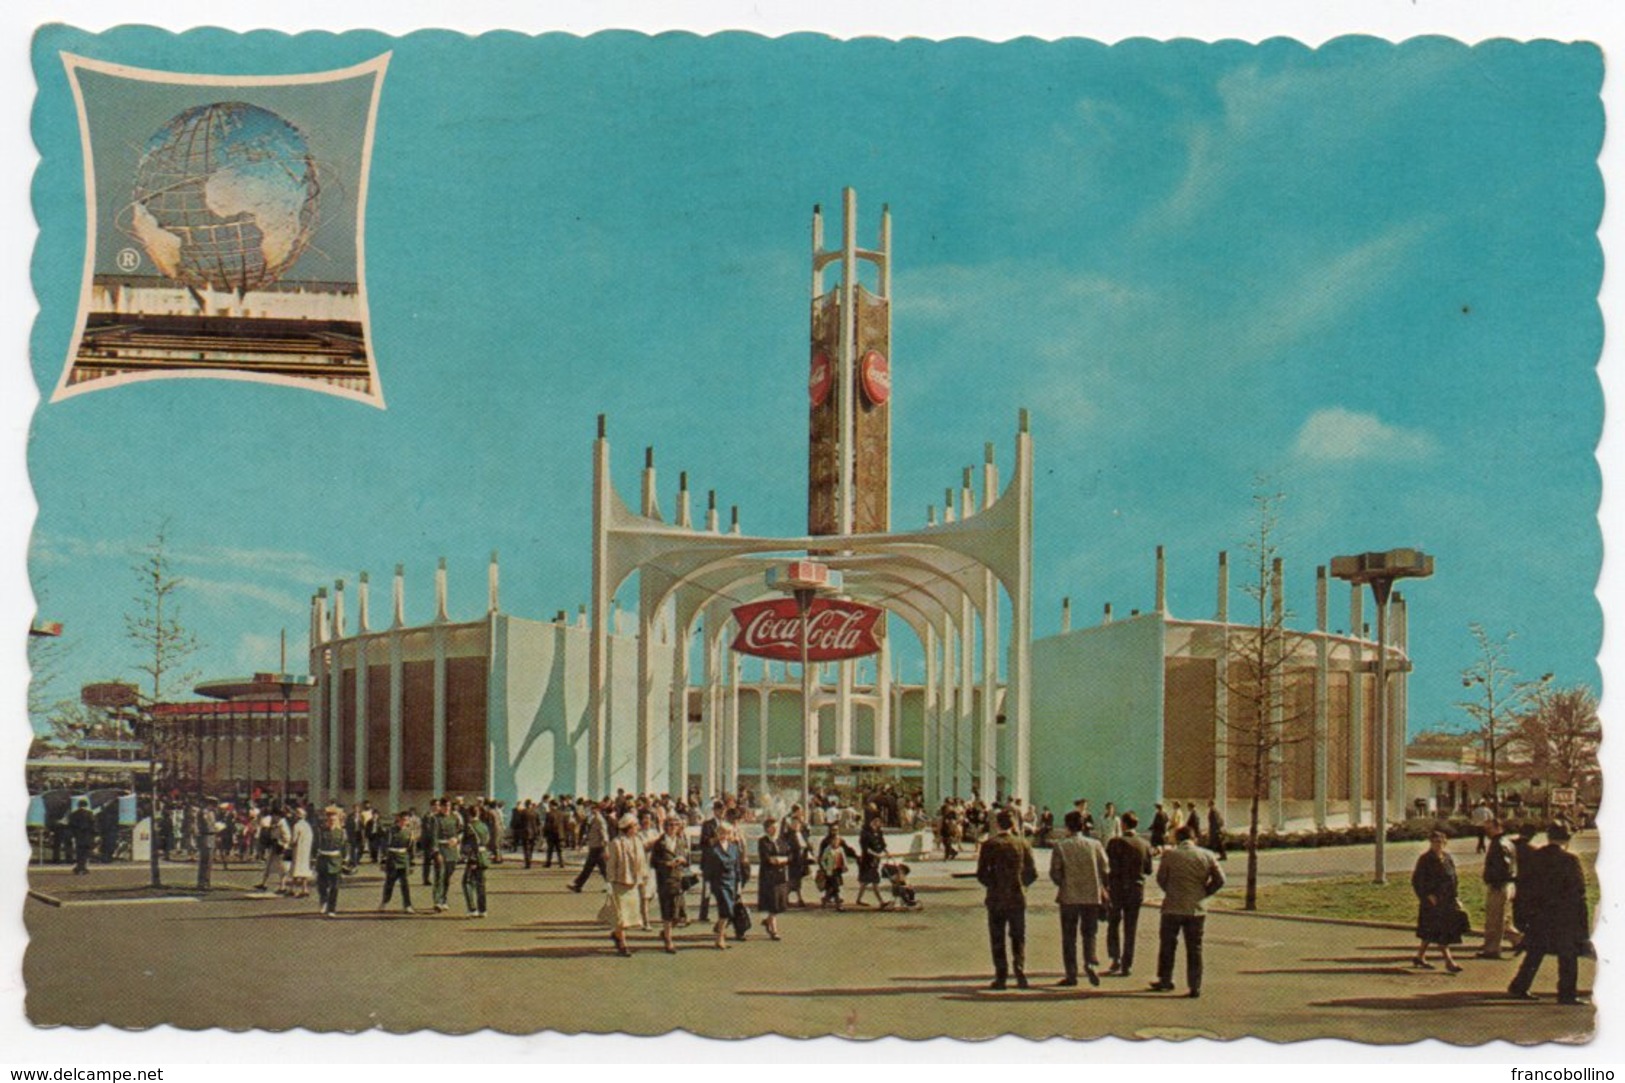 NEW YORK WORLD'S FAIR 1964-1965 - THE COCA COLA PAVILION - Exhibitions